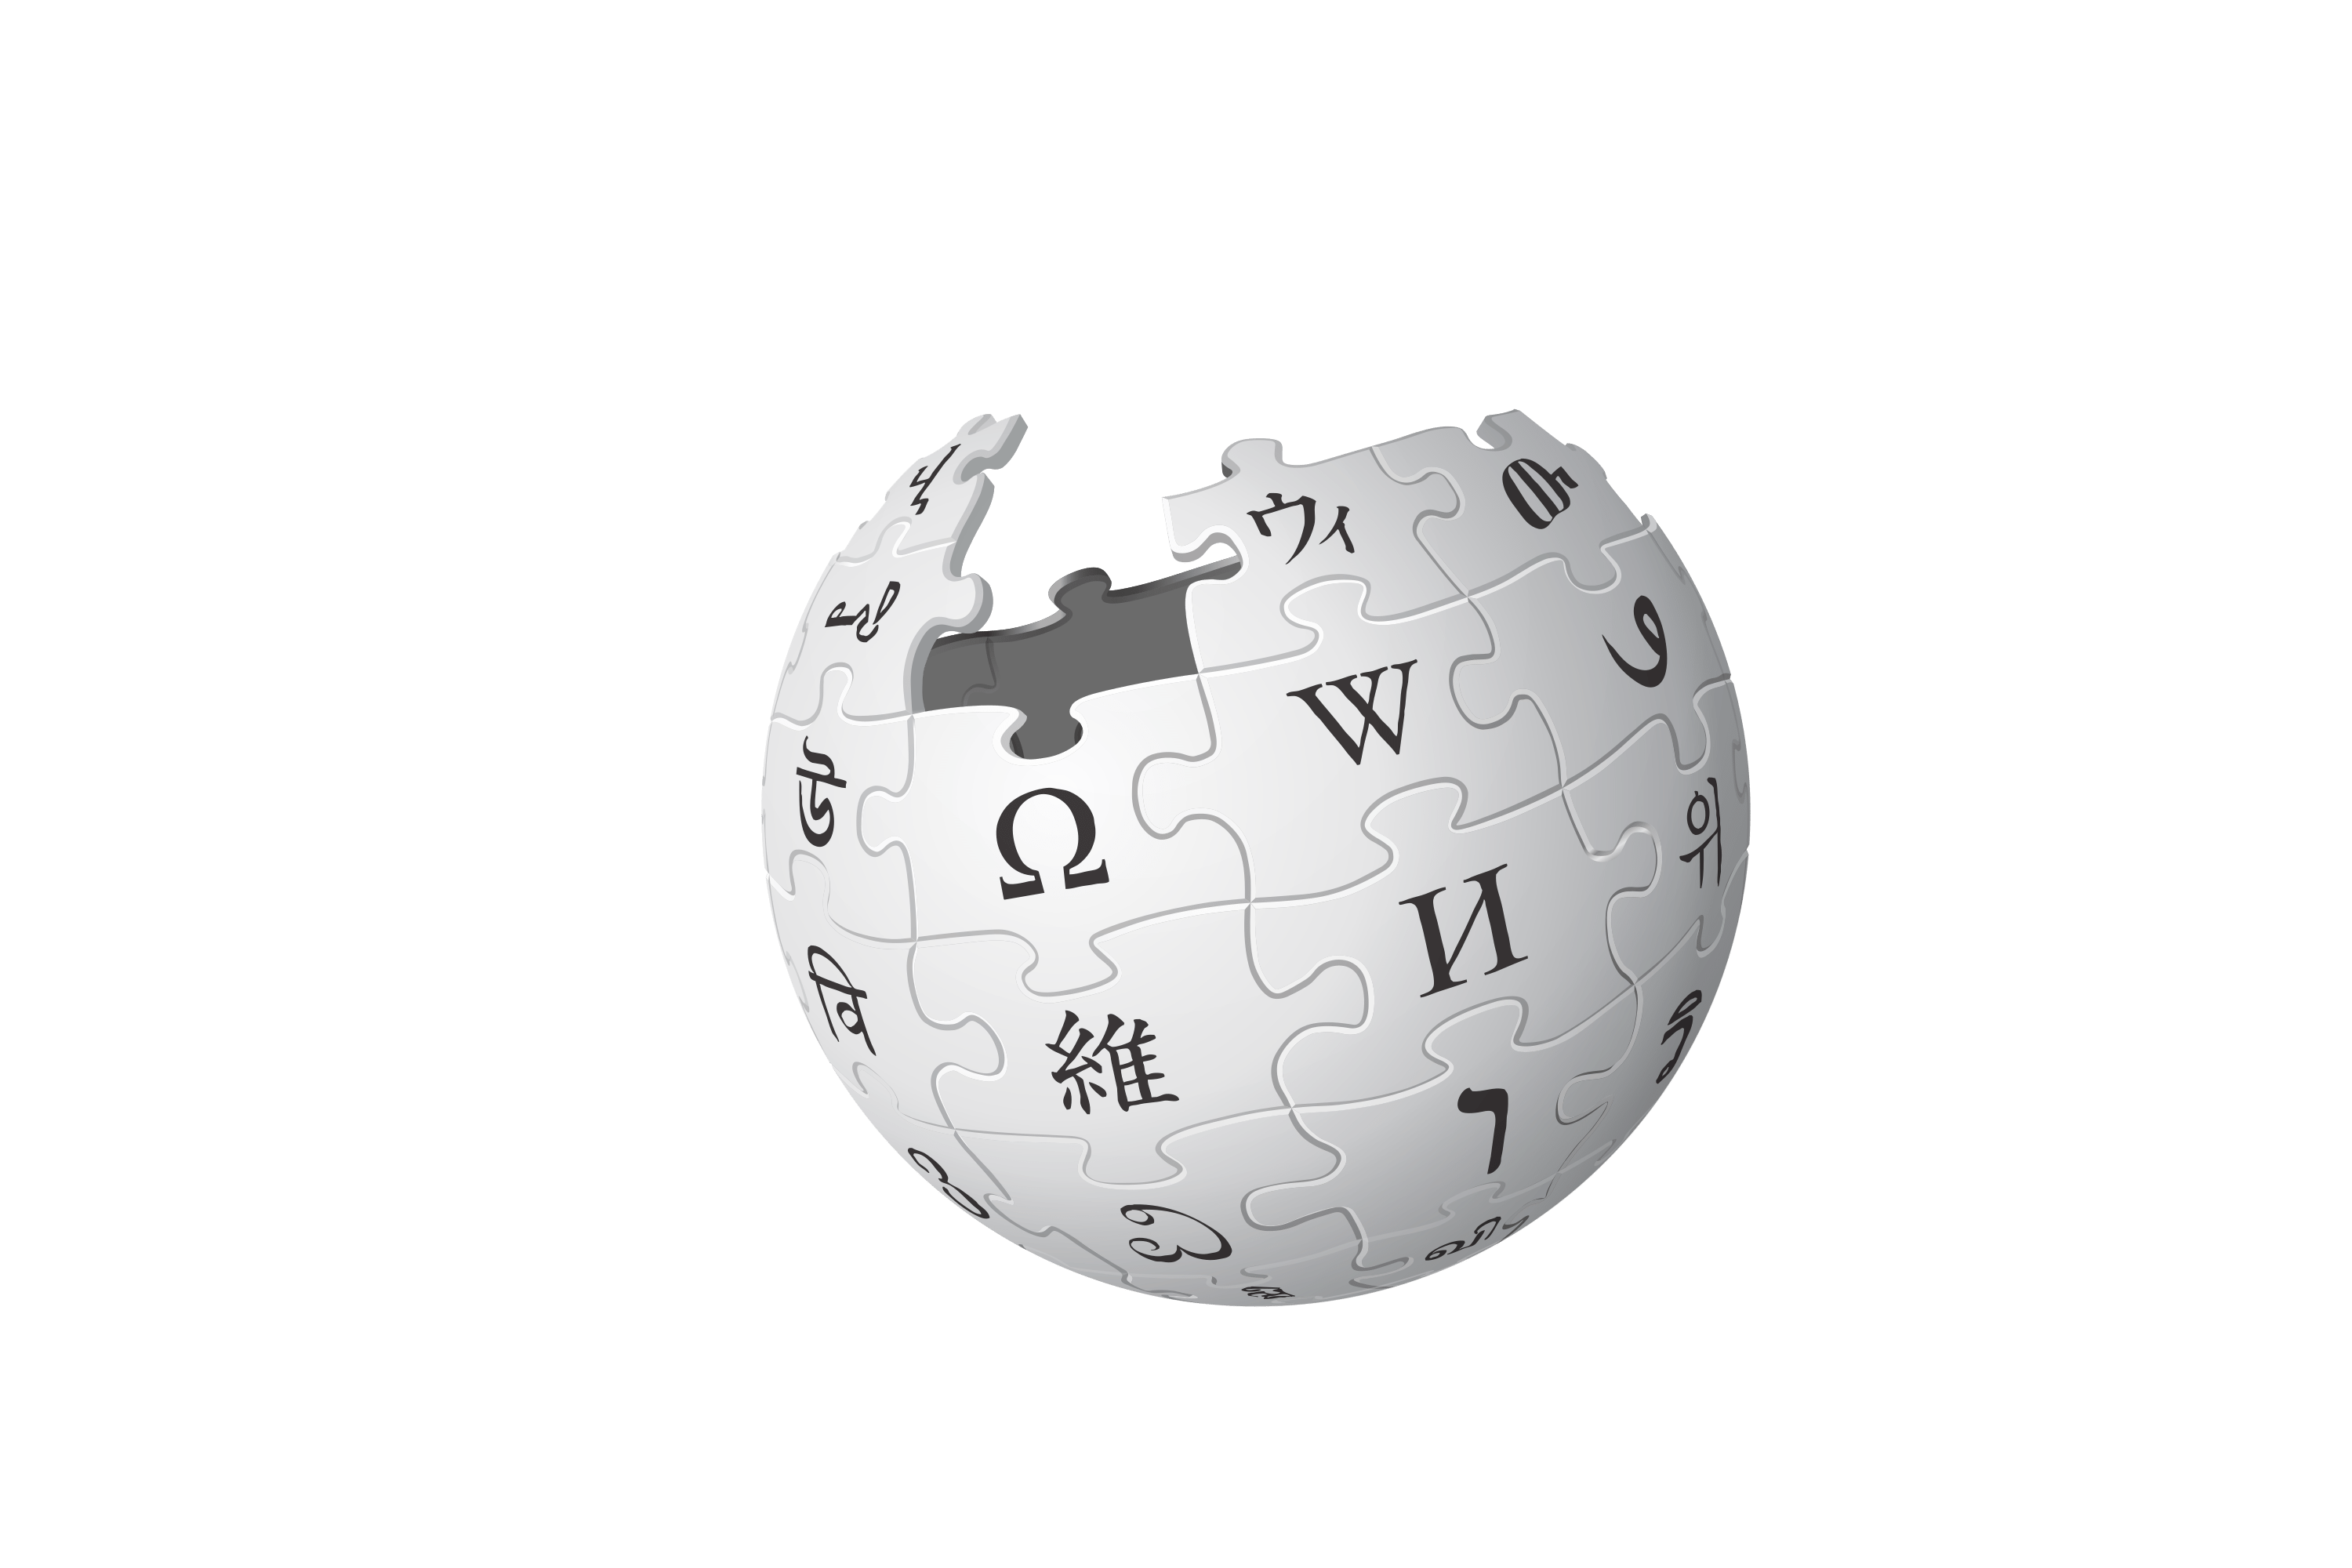 Https ru wikipedia org w. Википедия логотип. Значок Википедии. Логотип Википедии на прозрачном фоне. Википедия картинки.